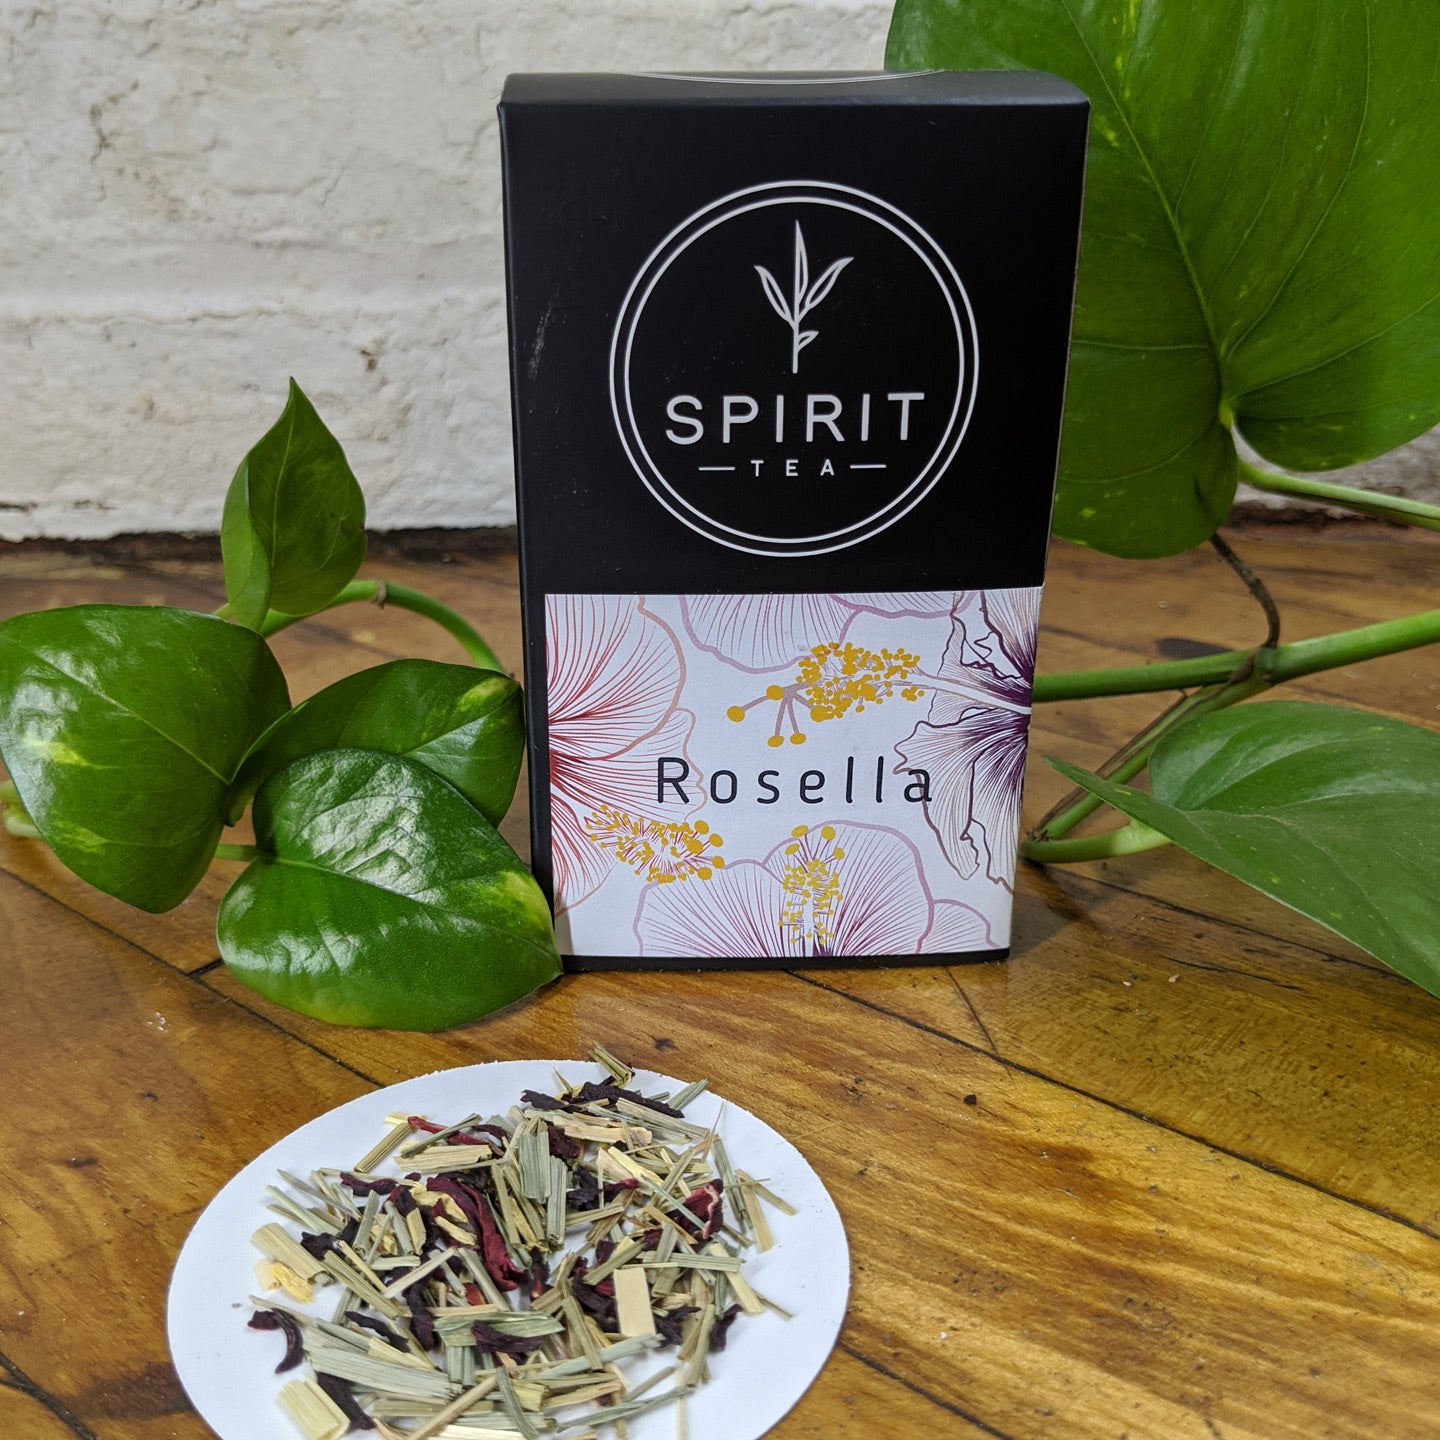 Rosella by Spirit Tea